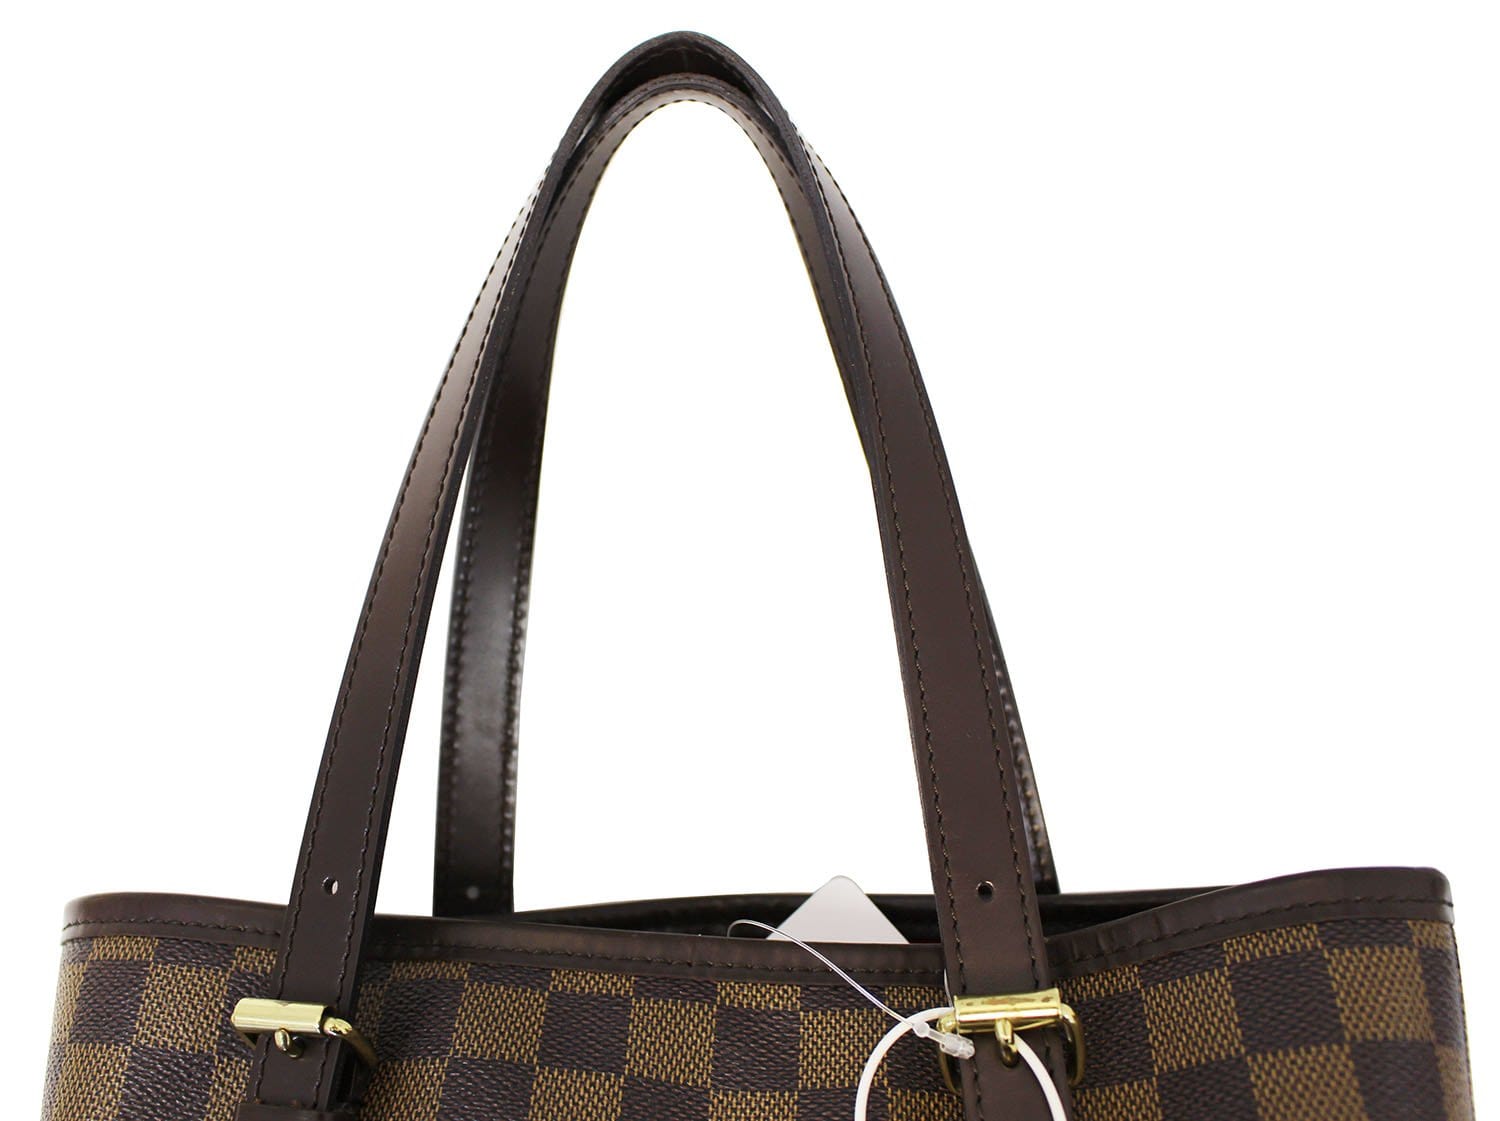 This Louis Vuitton bucket bag in damier ebene print on @miloutjioe